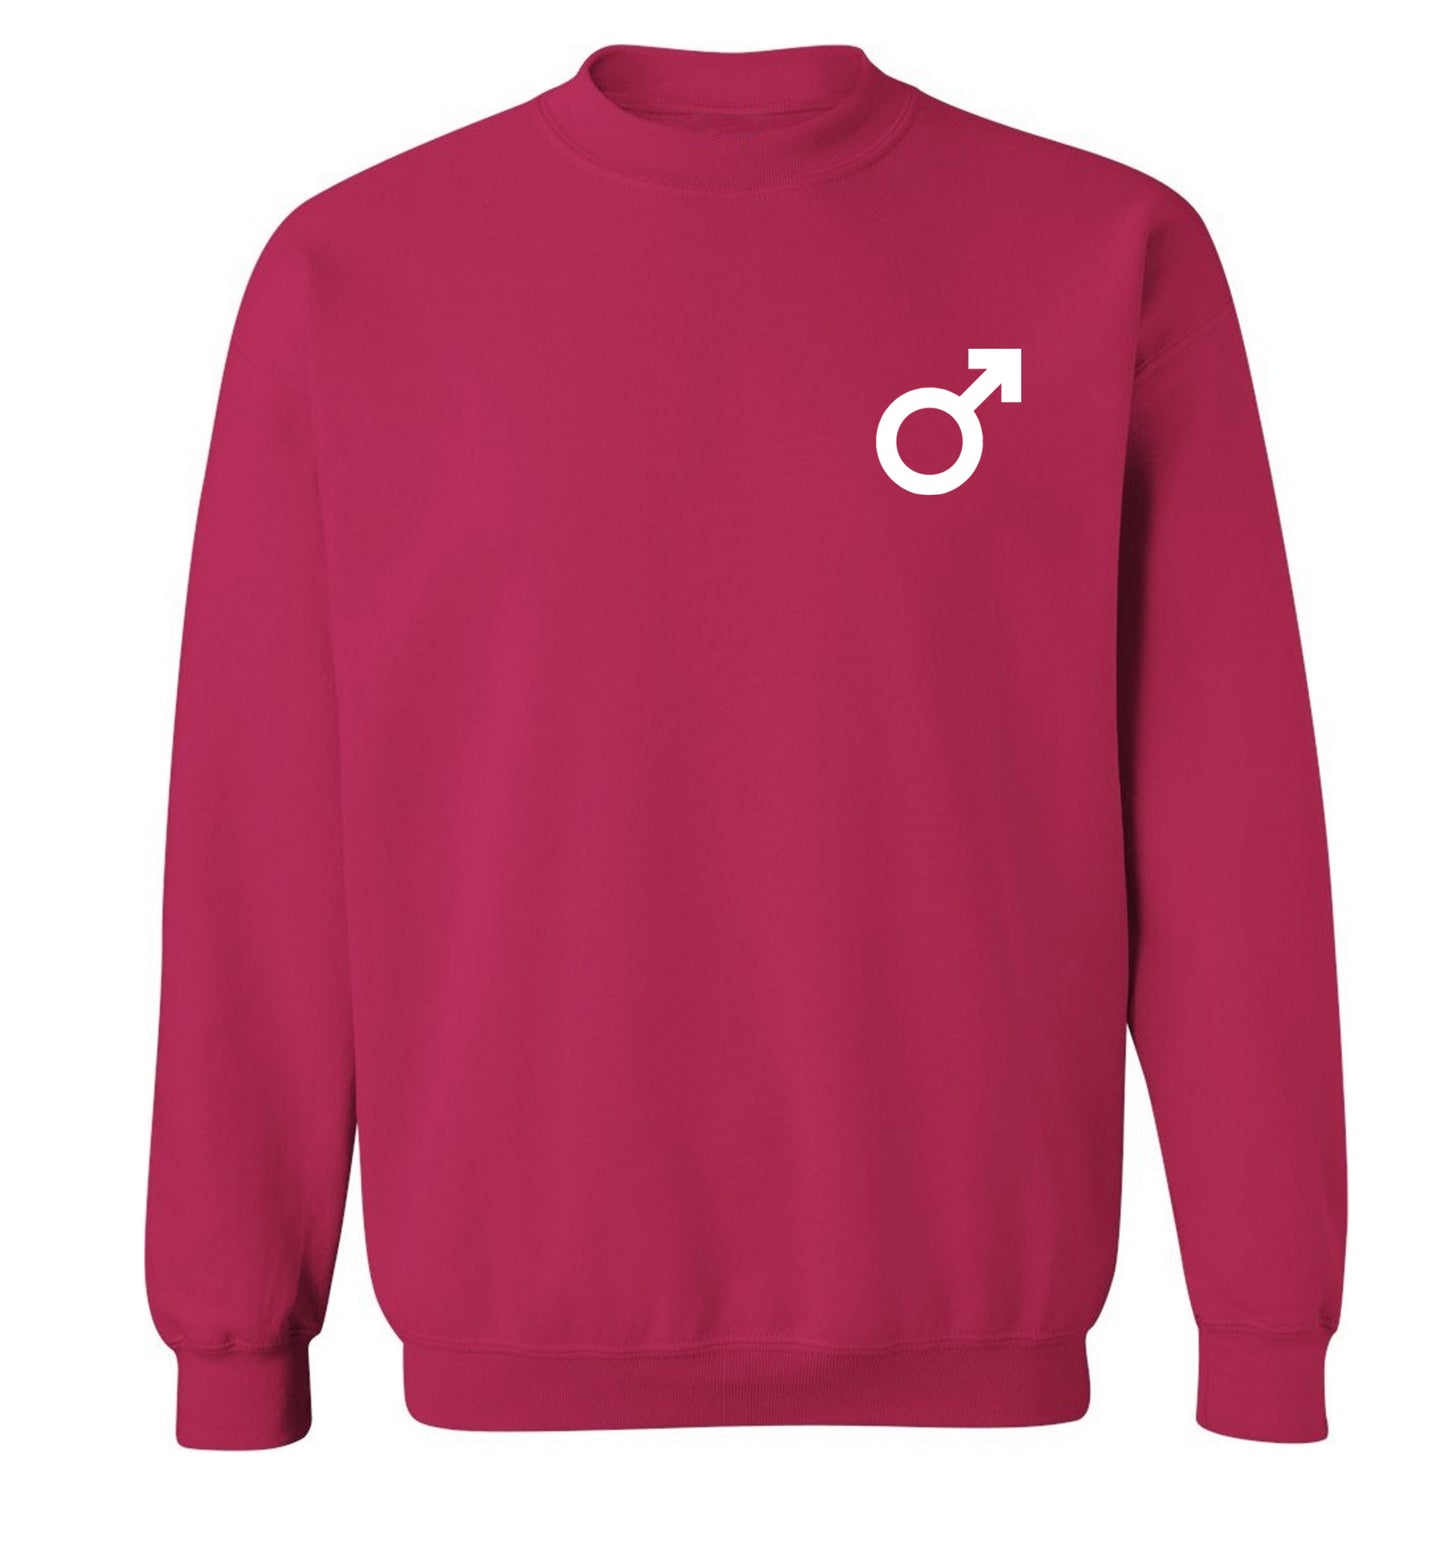 Male symbol pocket Adult's unisex pink Sweater 2XL